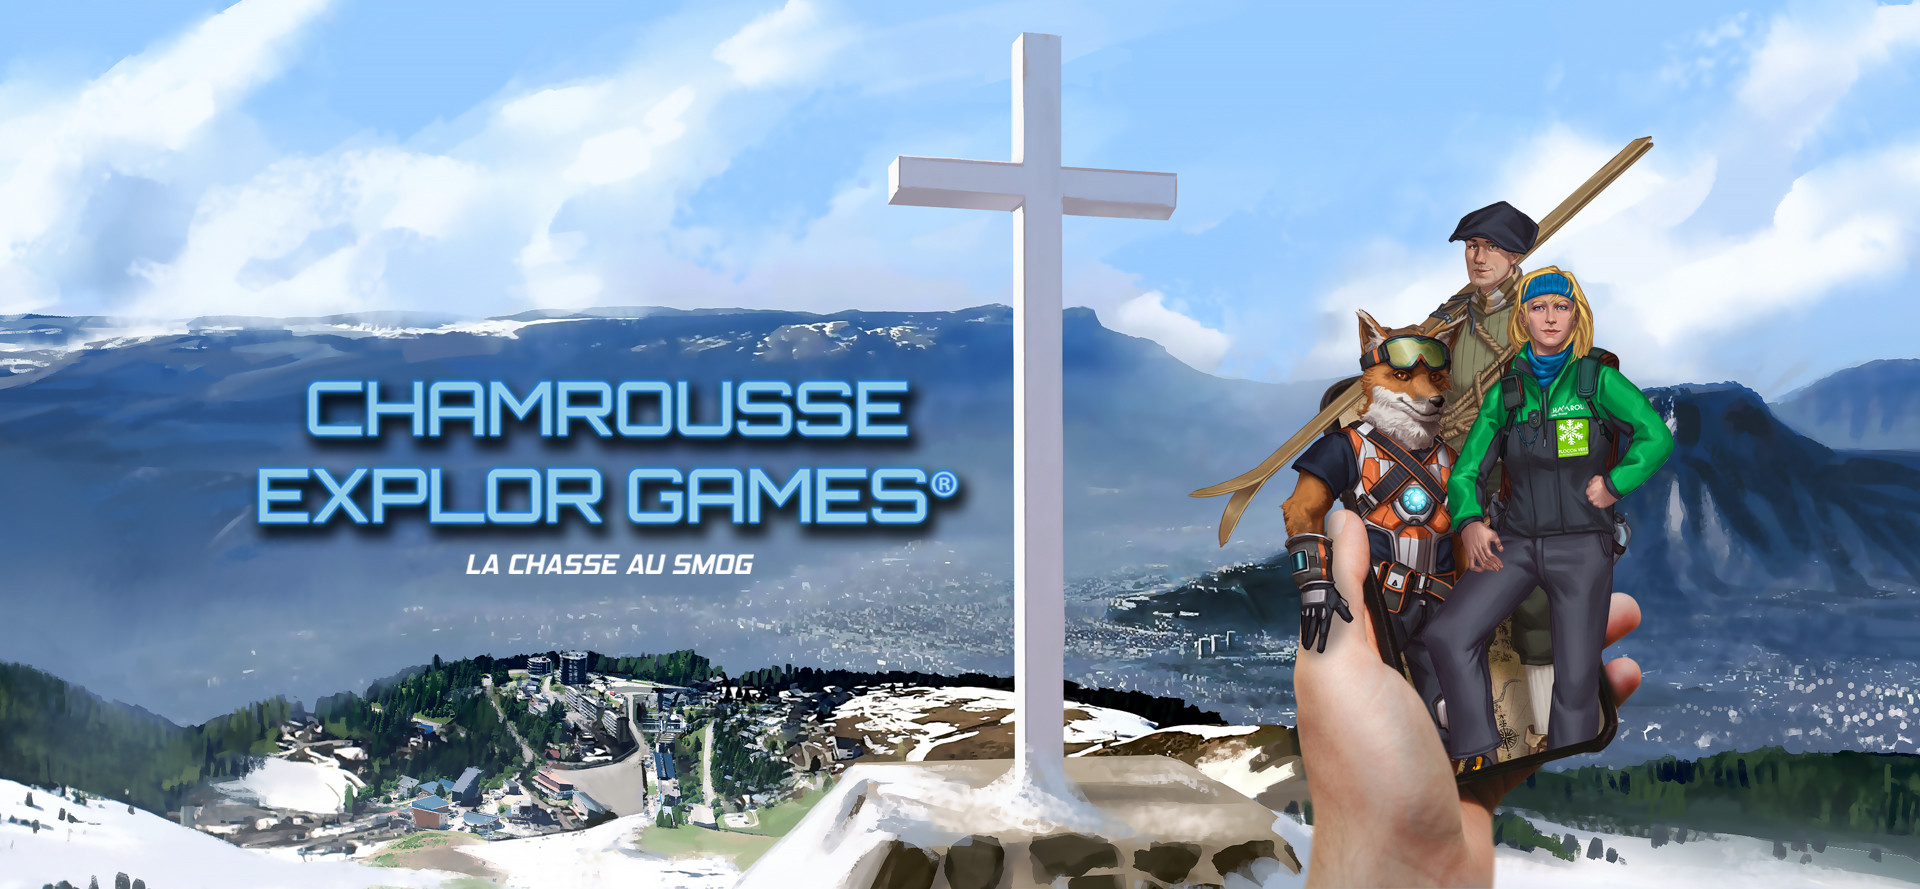 Explor games Chamrousse - Chasse au smog